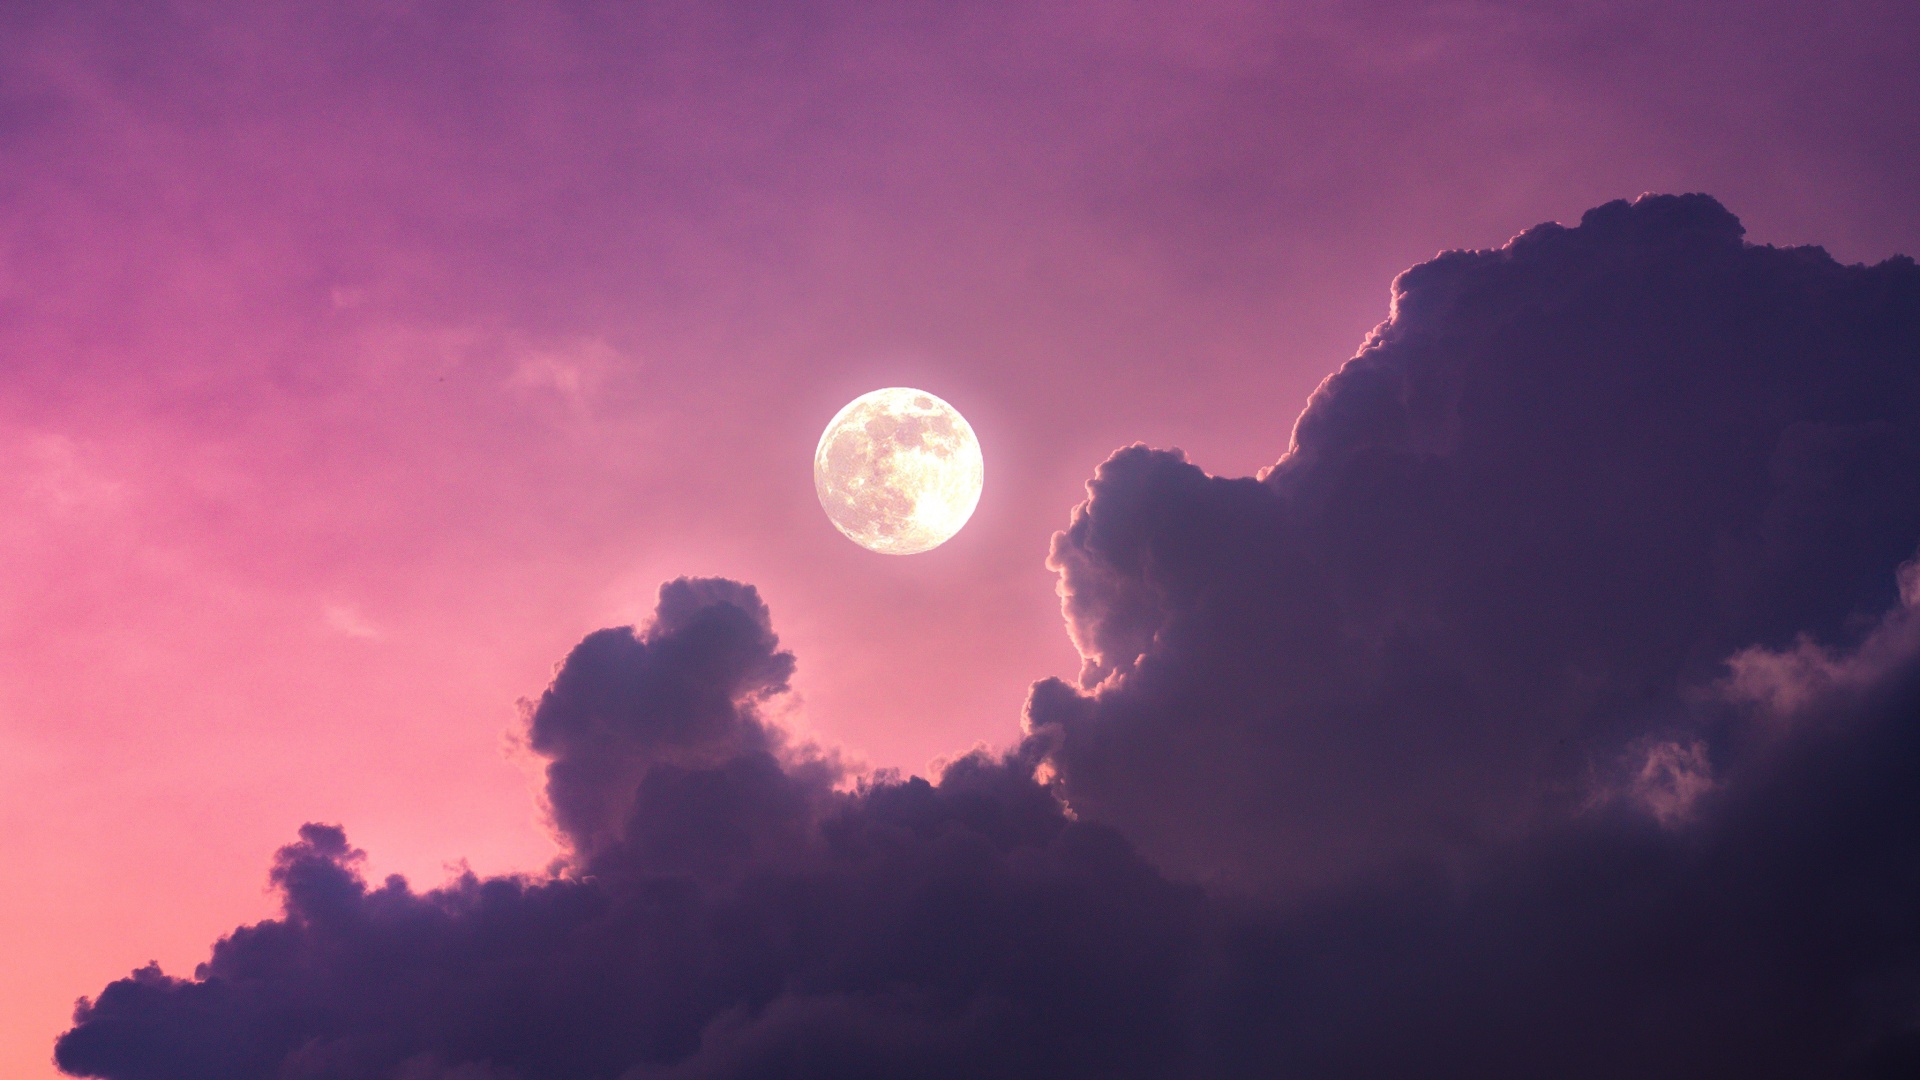 Full moon 4K Wallpaper, Clouds, Pink sky, Nature, #1653